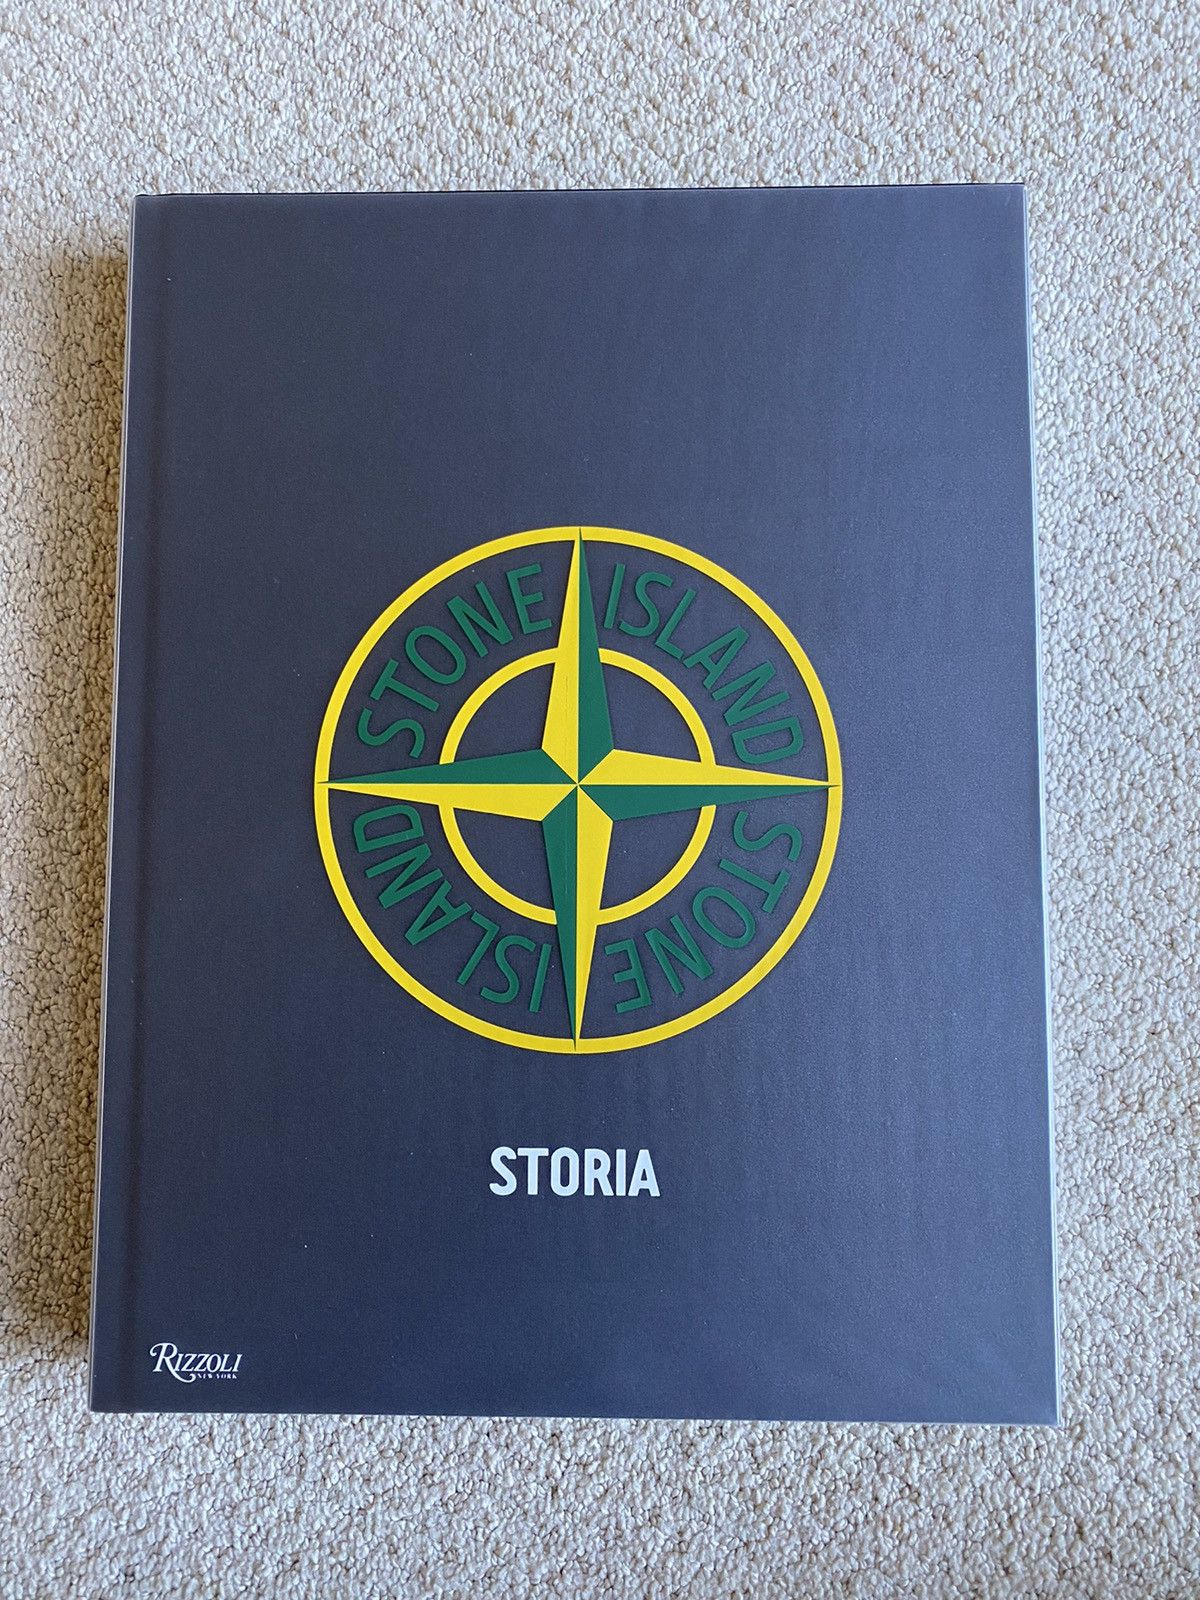 Stone Island Stone Island Storia Book by Rizzoli Size ONE SIZE - 1 Preview